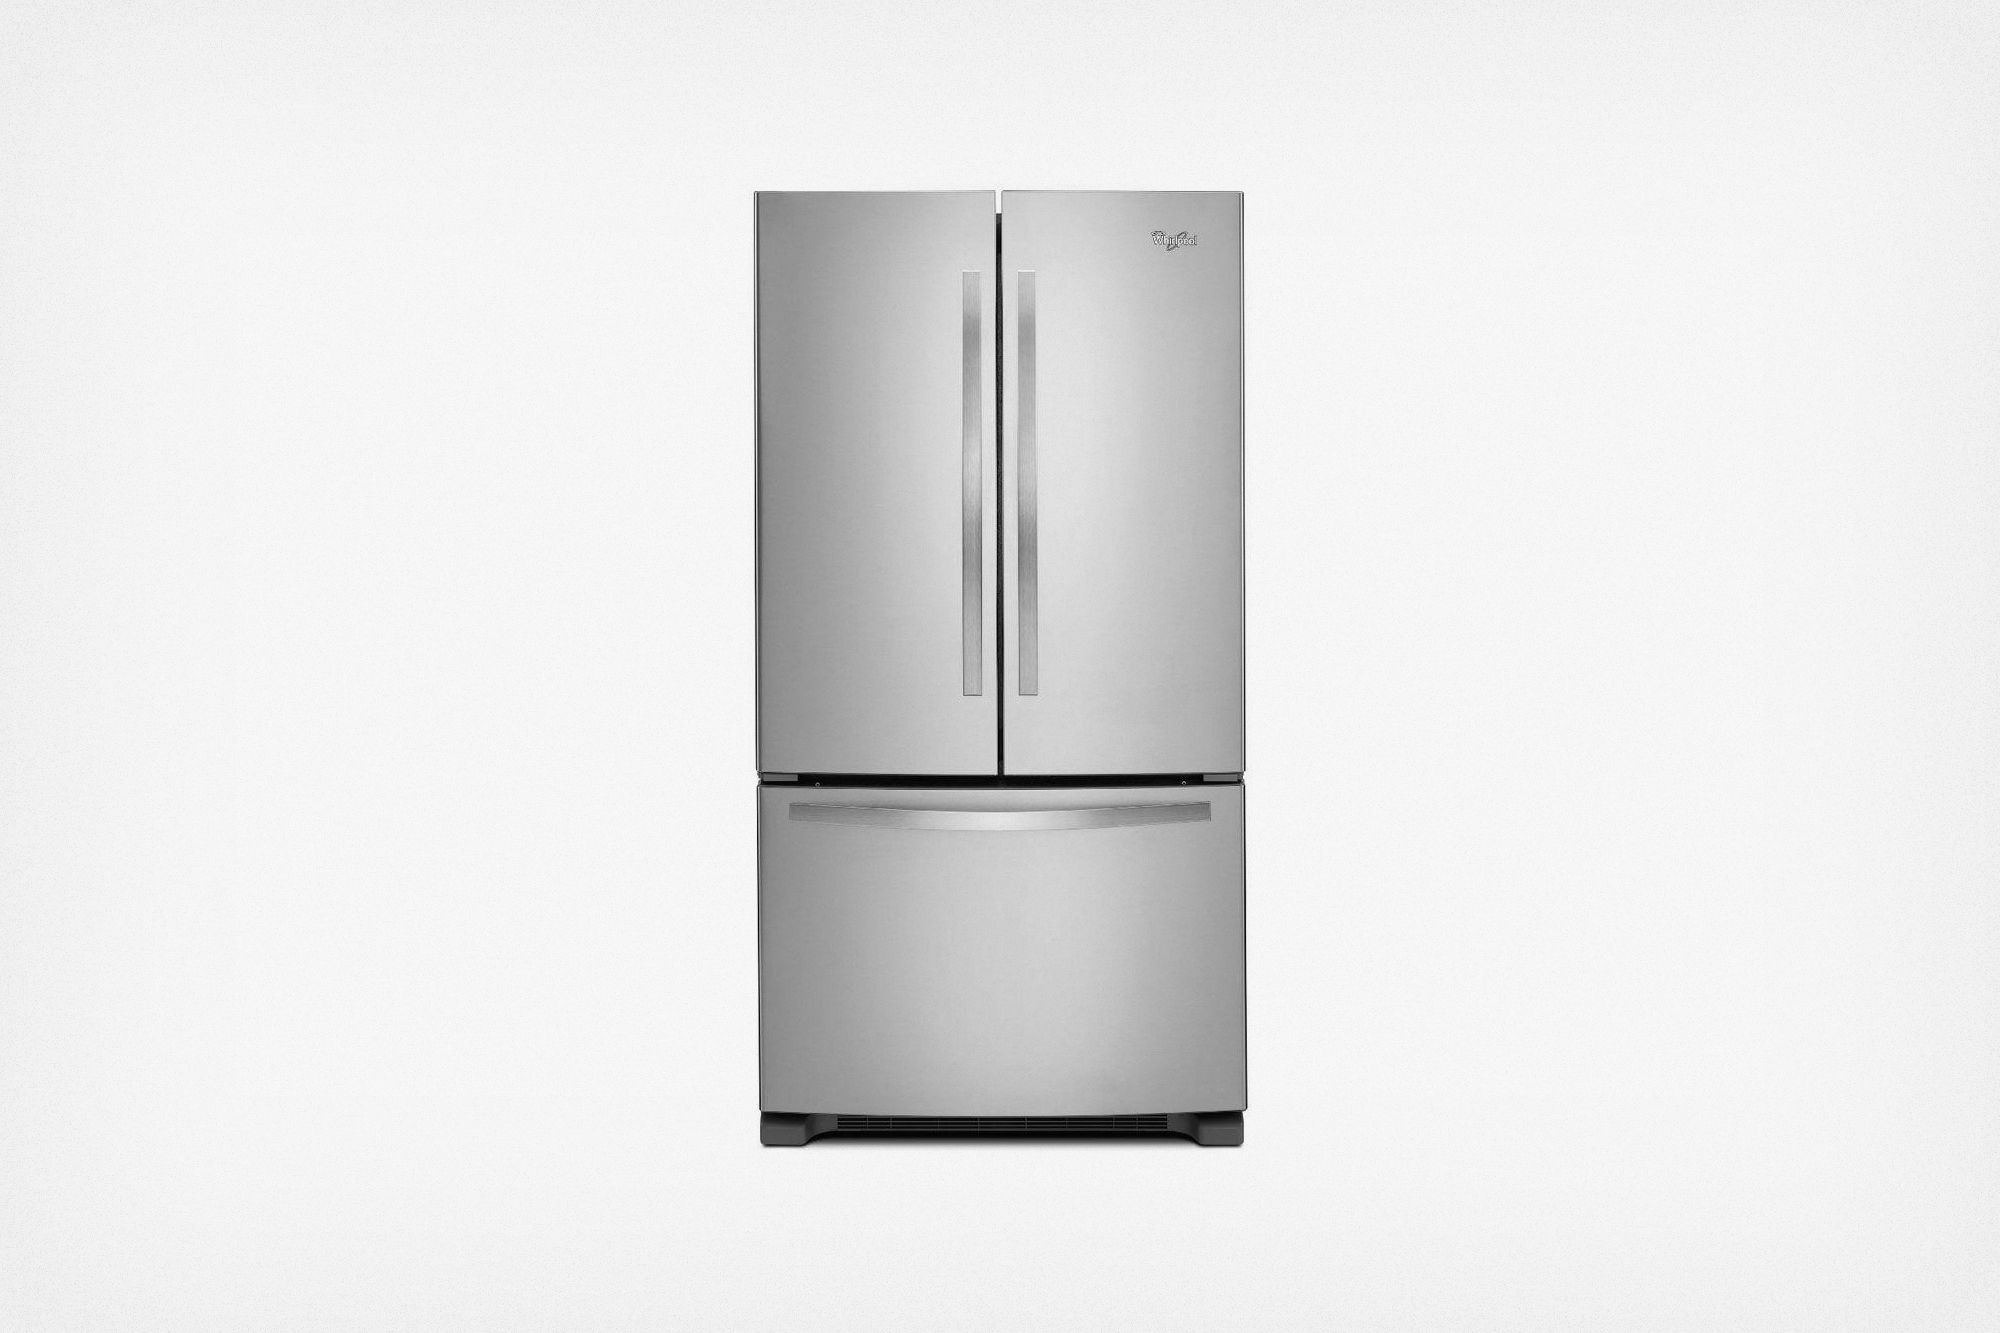 The best refrigerator